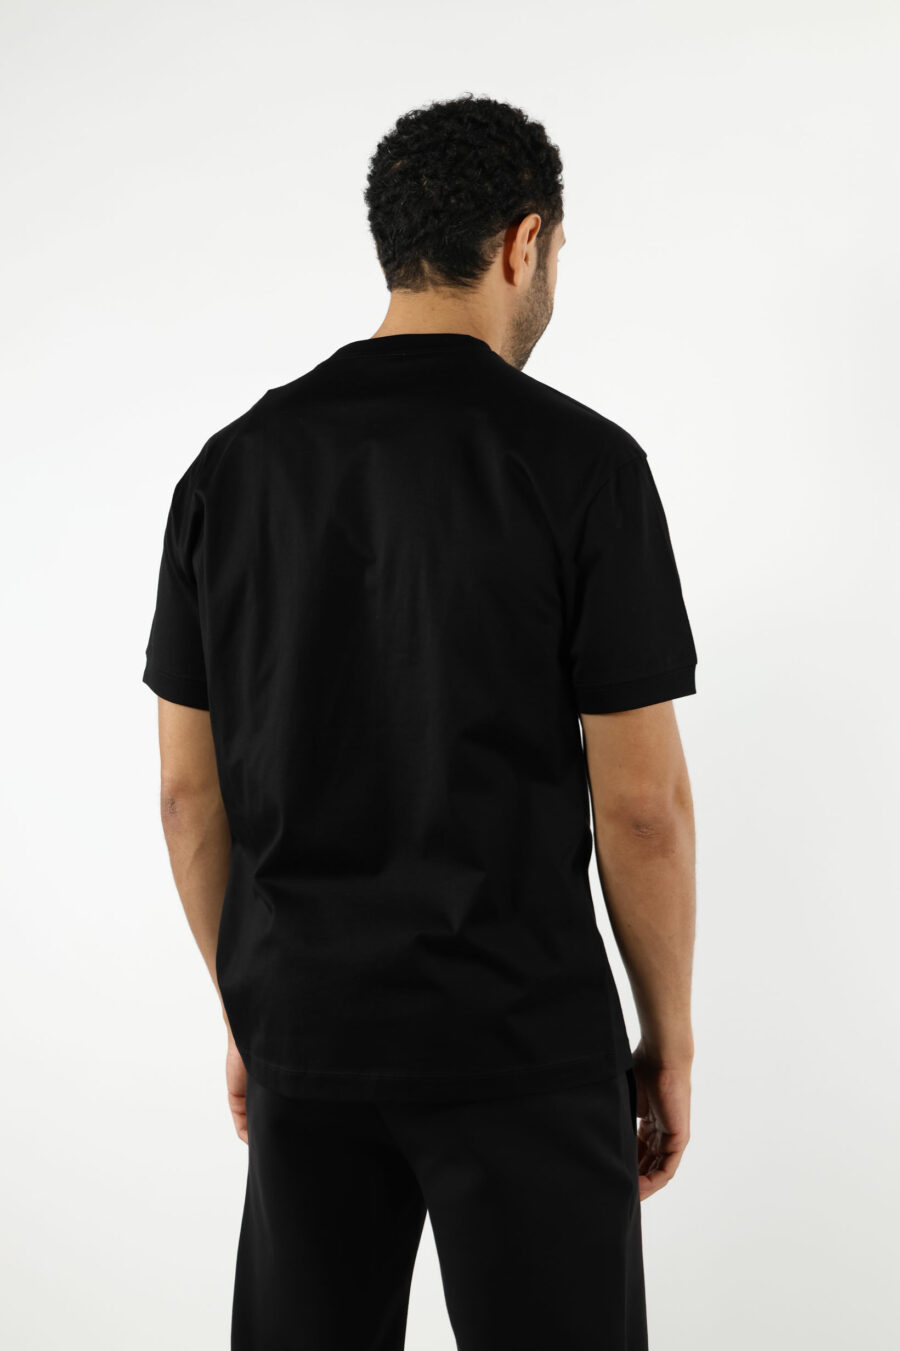 Schwarzes T-Shirt mit "lux identity" Maxilogo in grünem Quadrat - 110965